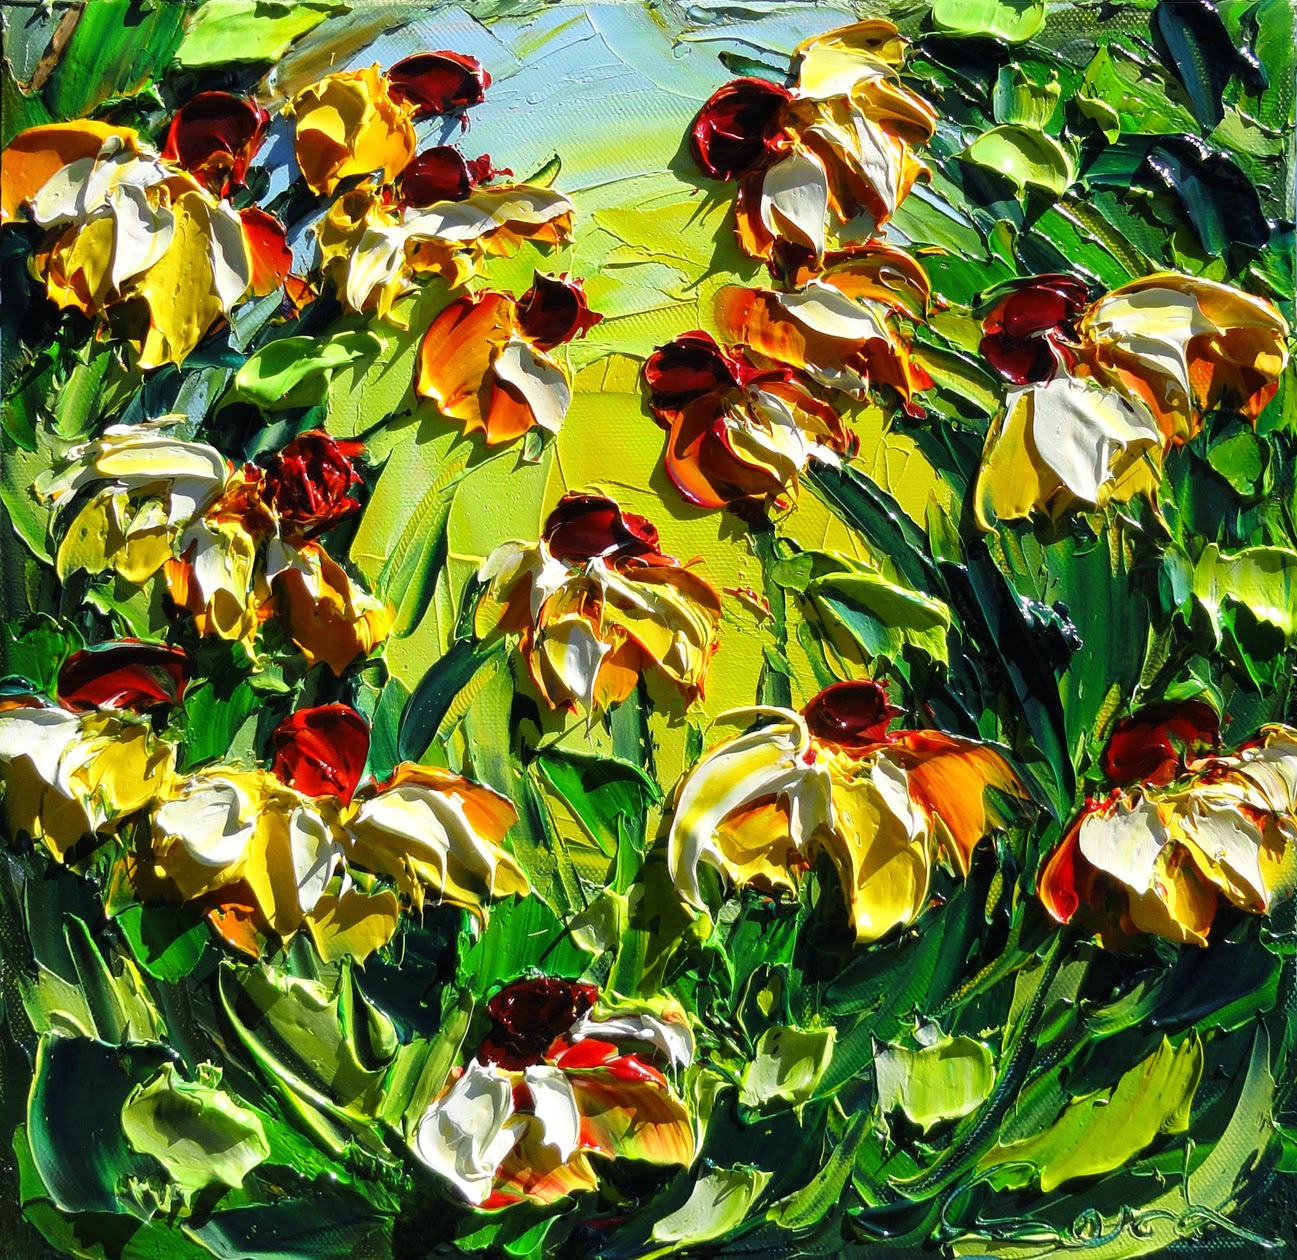 http://beatasasik.indiemade.com/product/b-sasik-original-oil-painting-garden-art-daisies-painting?tid=53